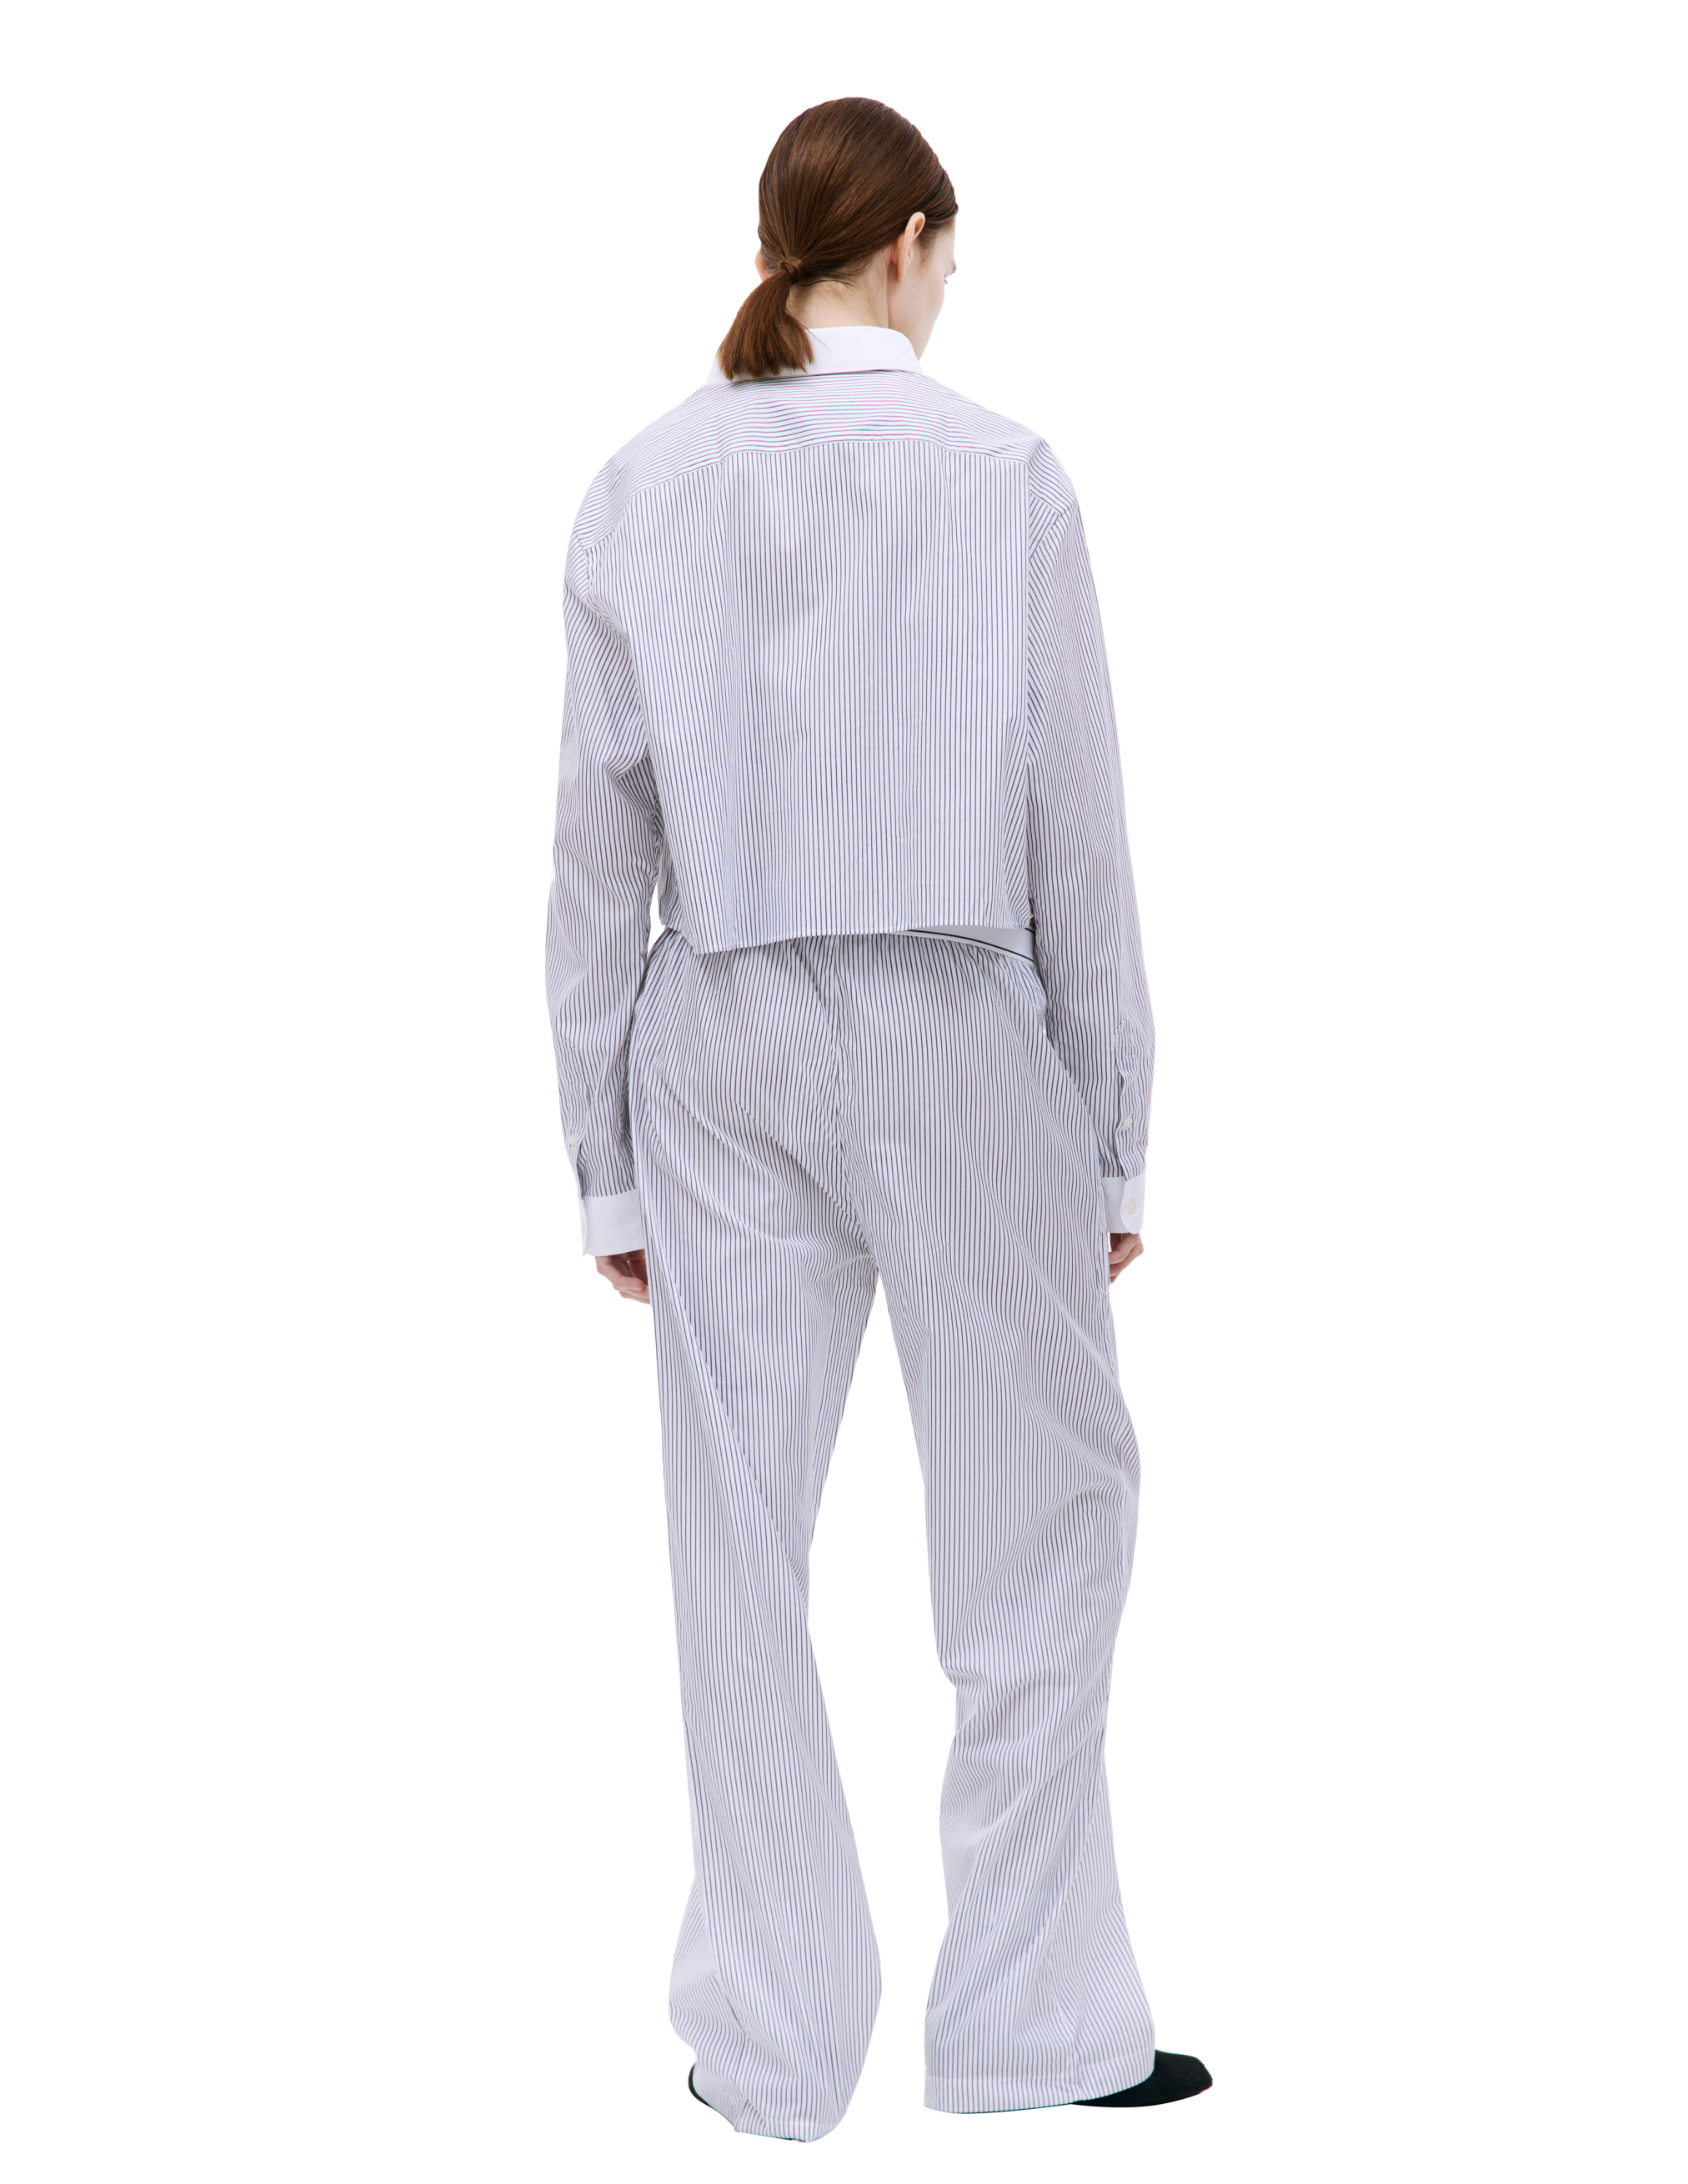 Пижамные брюки в полоску SPORTY & RICH PAAW2322NS, размер S;M;L;XL - фото 4